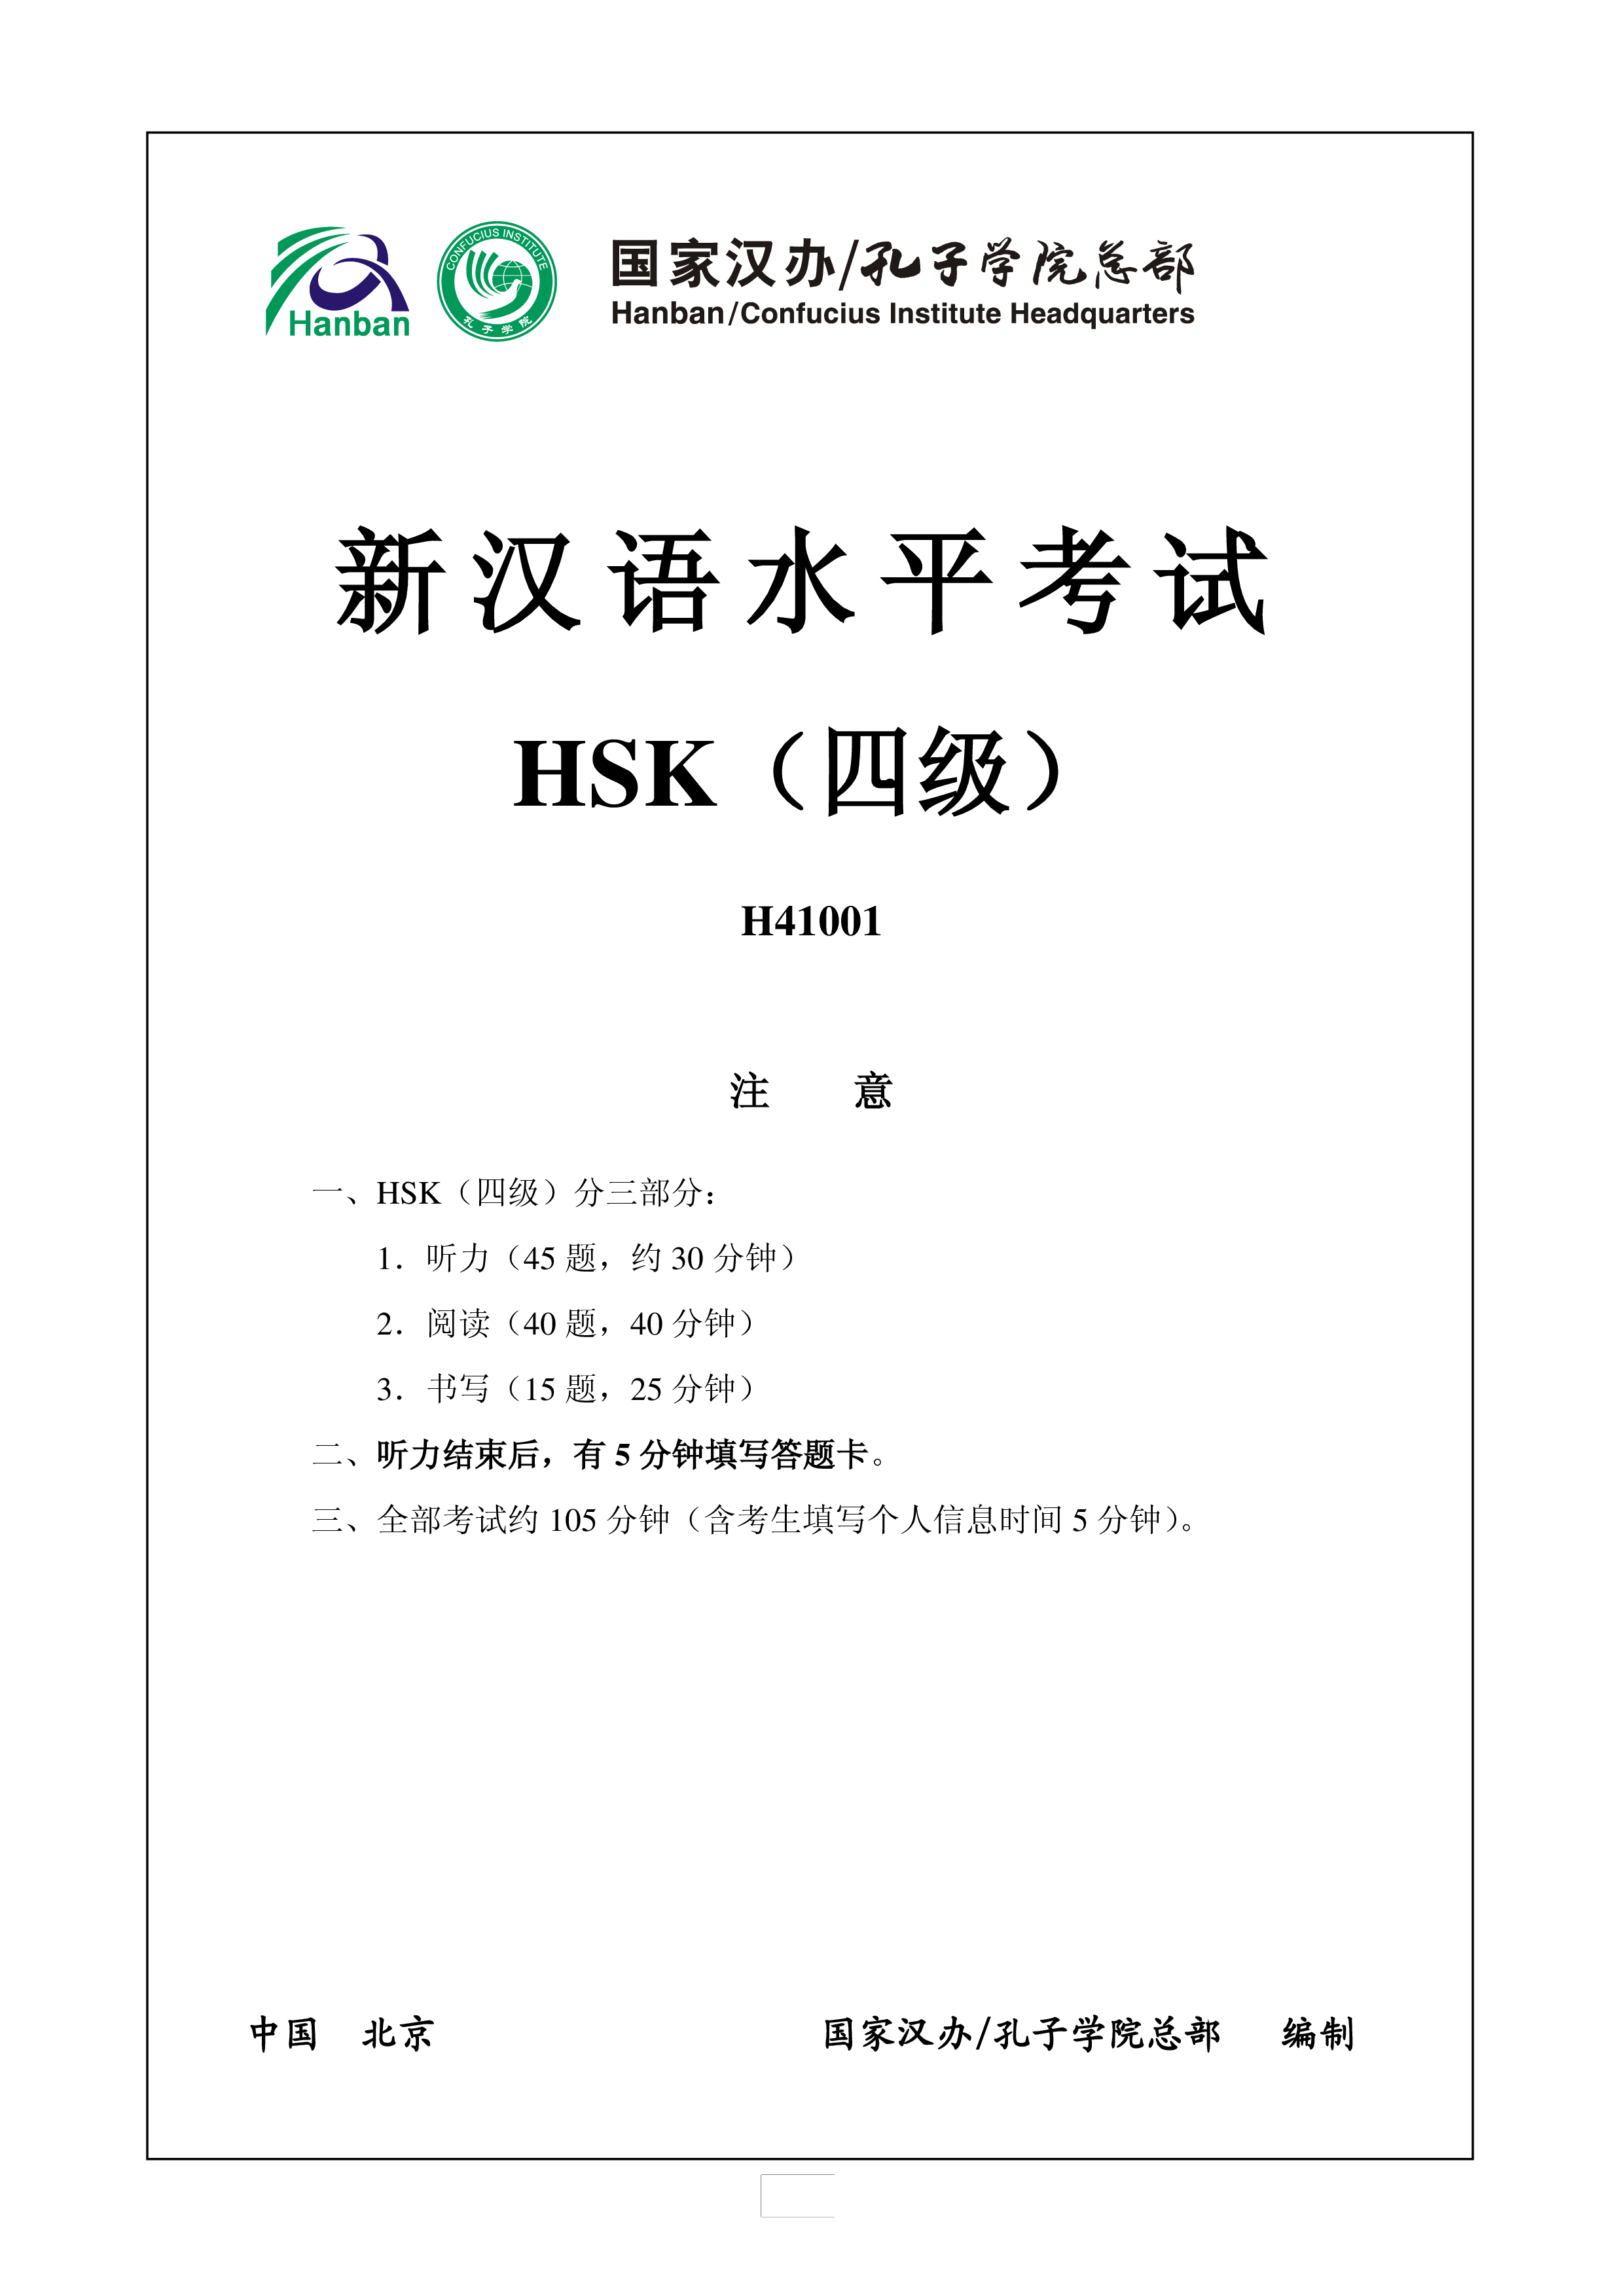 hsk4 chinese exam including answers # hsk h41001 Hauptschablonenbild